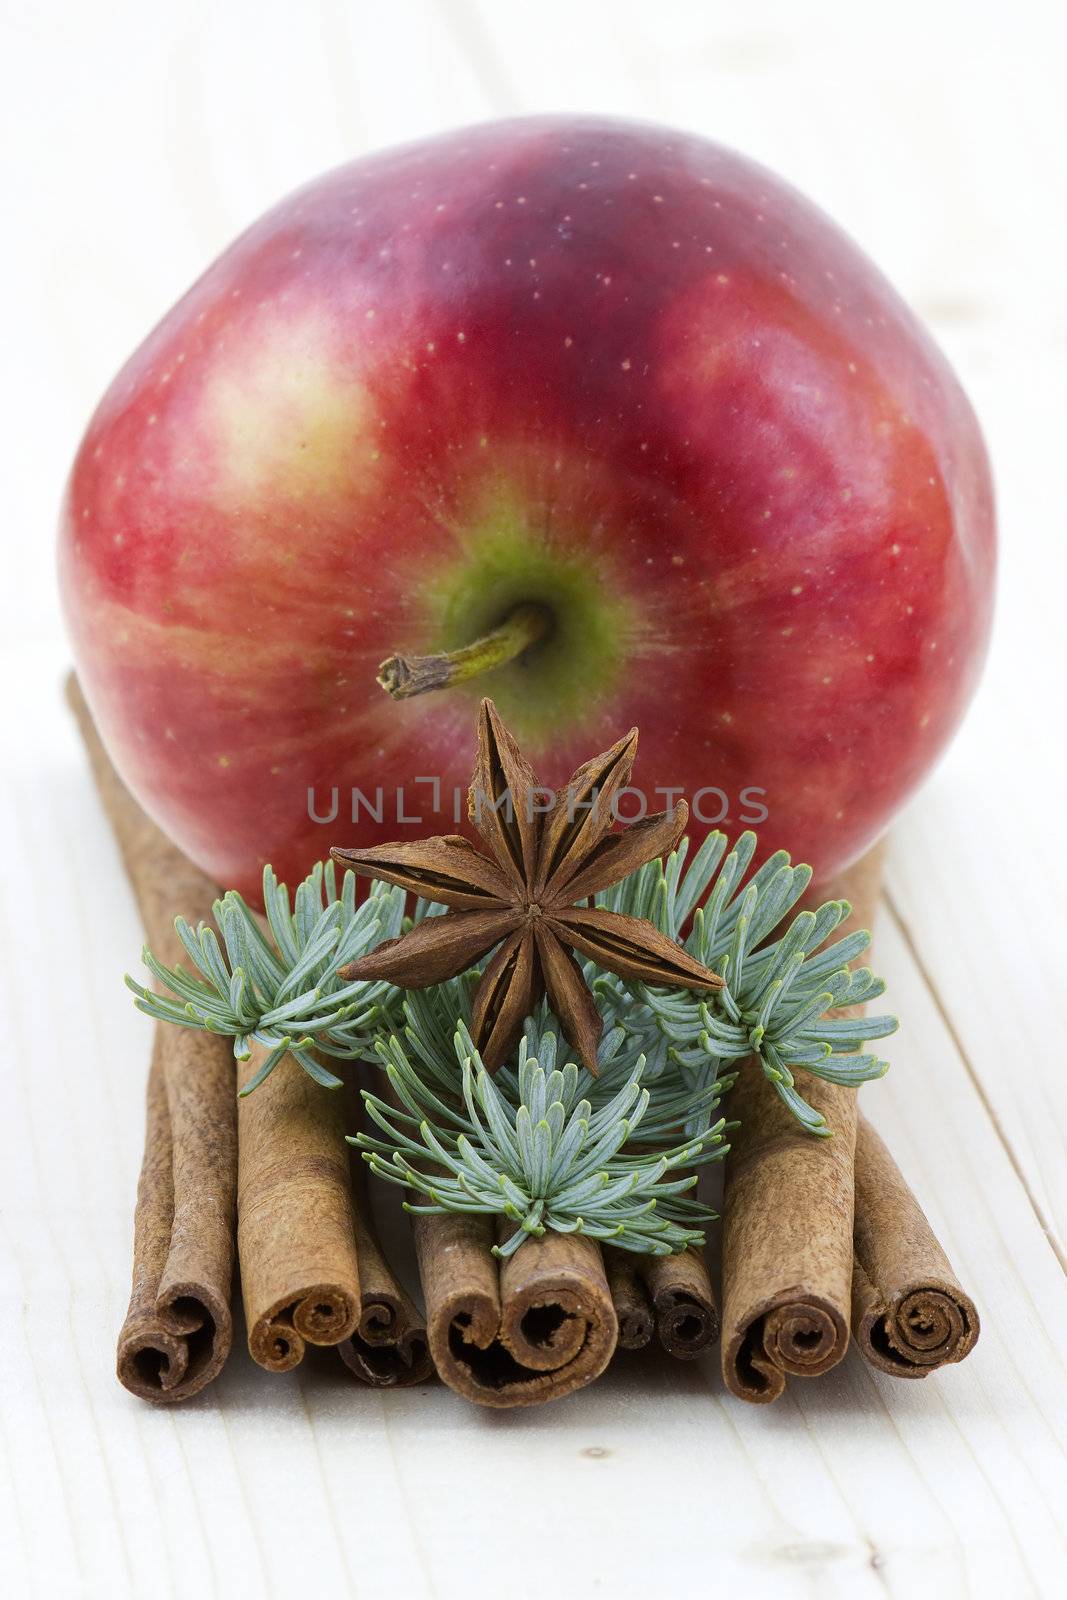 red apple, cinnamon sticks, anise by miradrozdowski